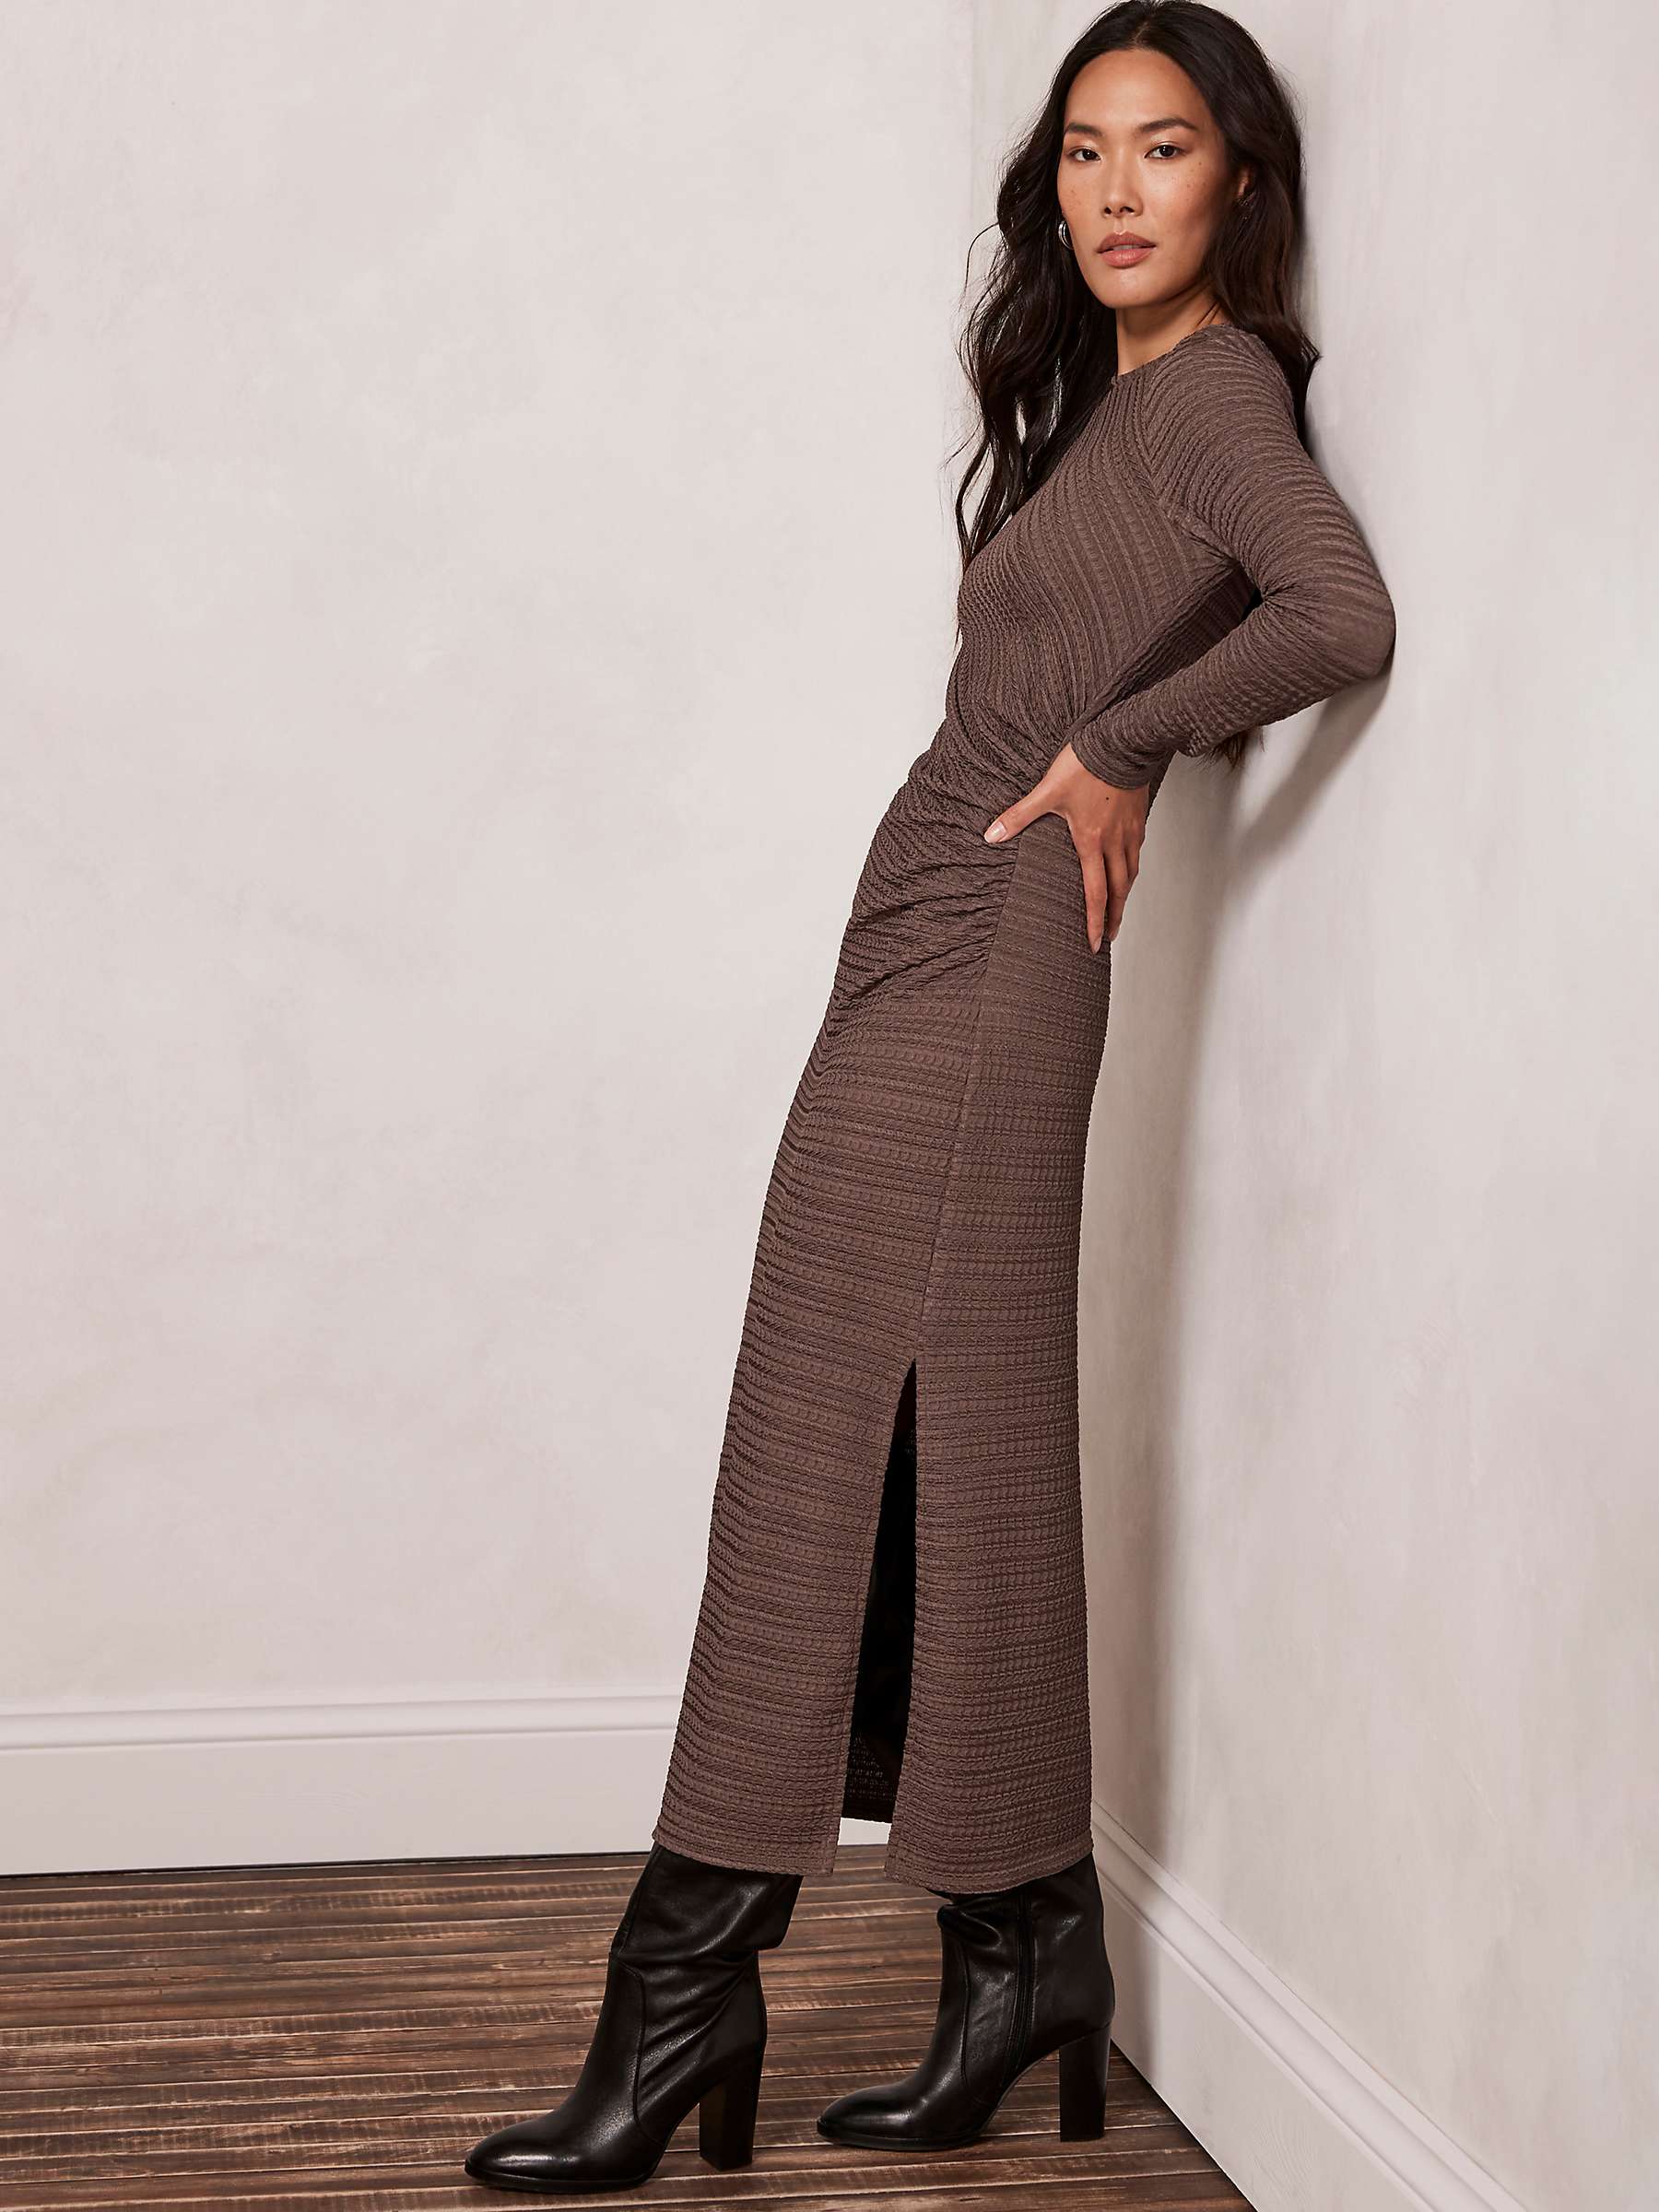 Buy Mint Velvet Textured Midi Dress, Dark Brown Online at johnlewis.com